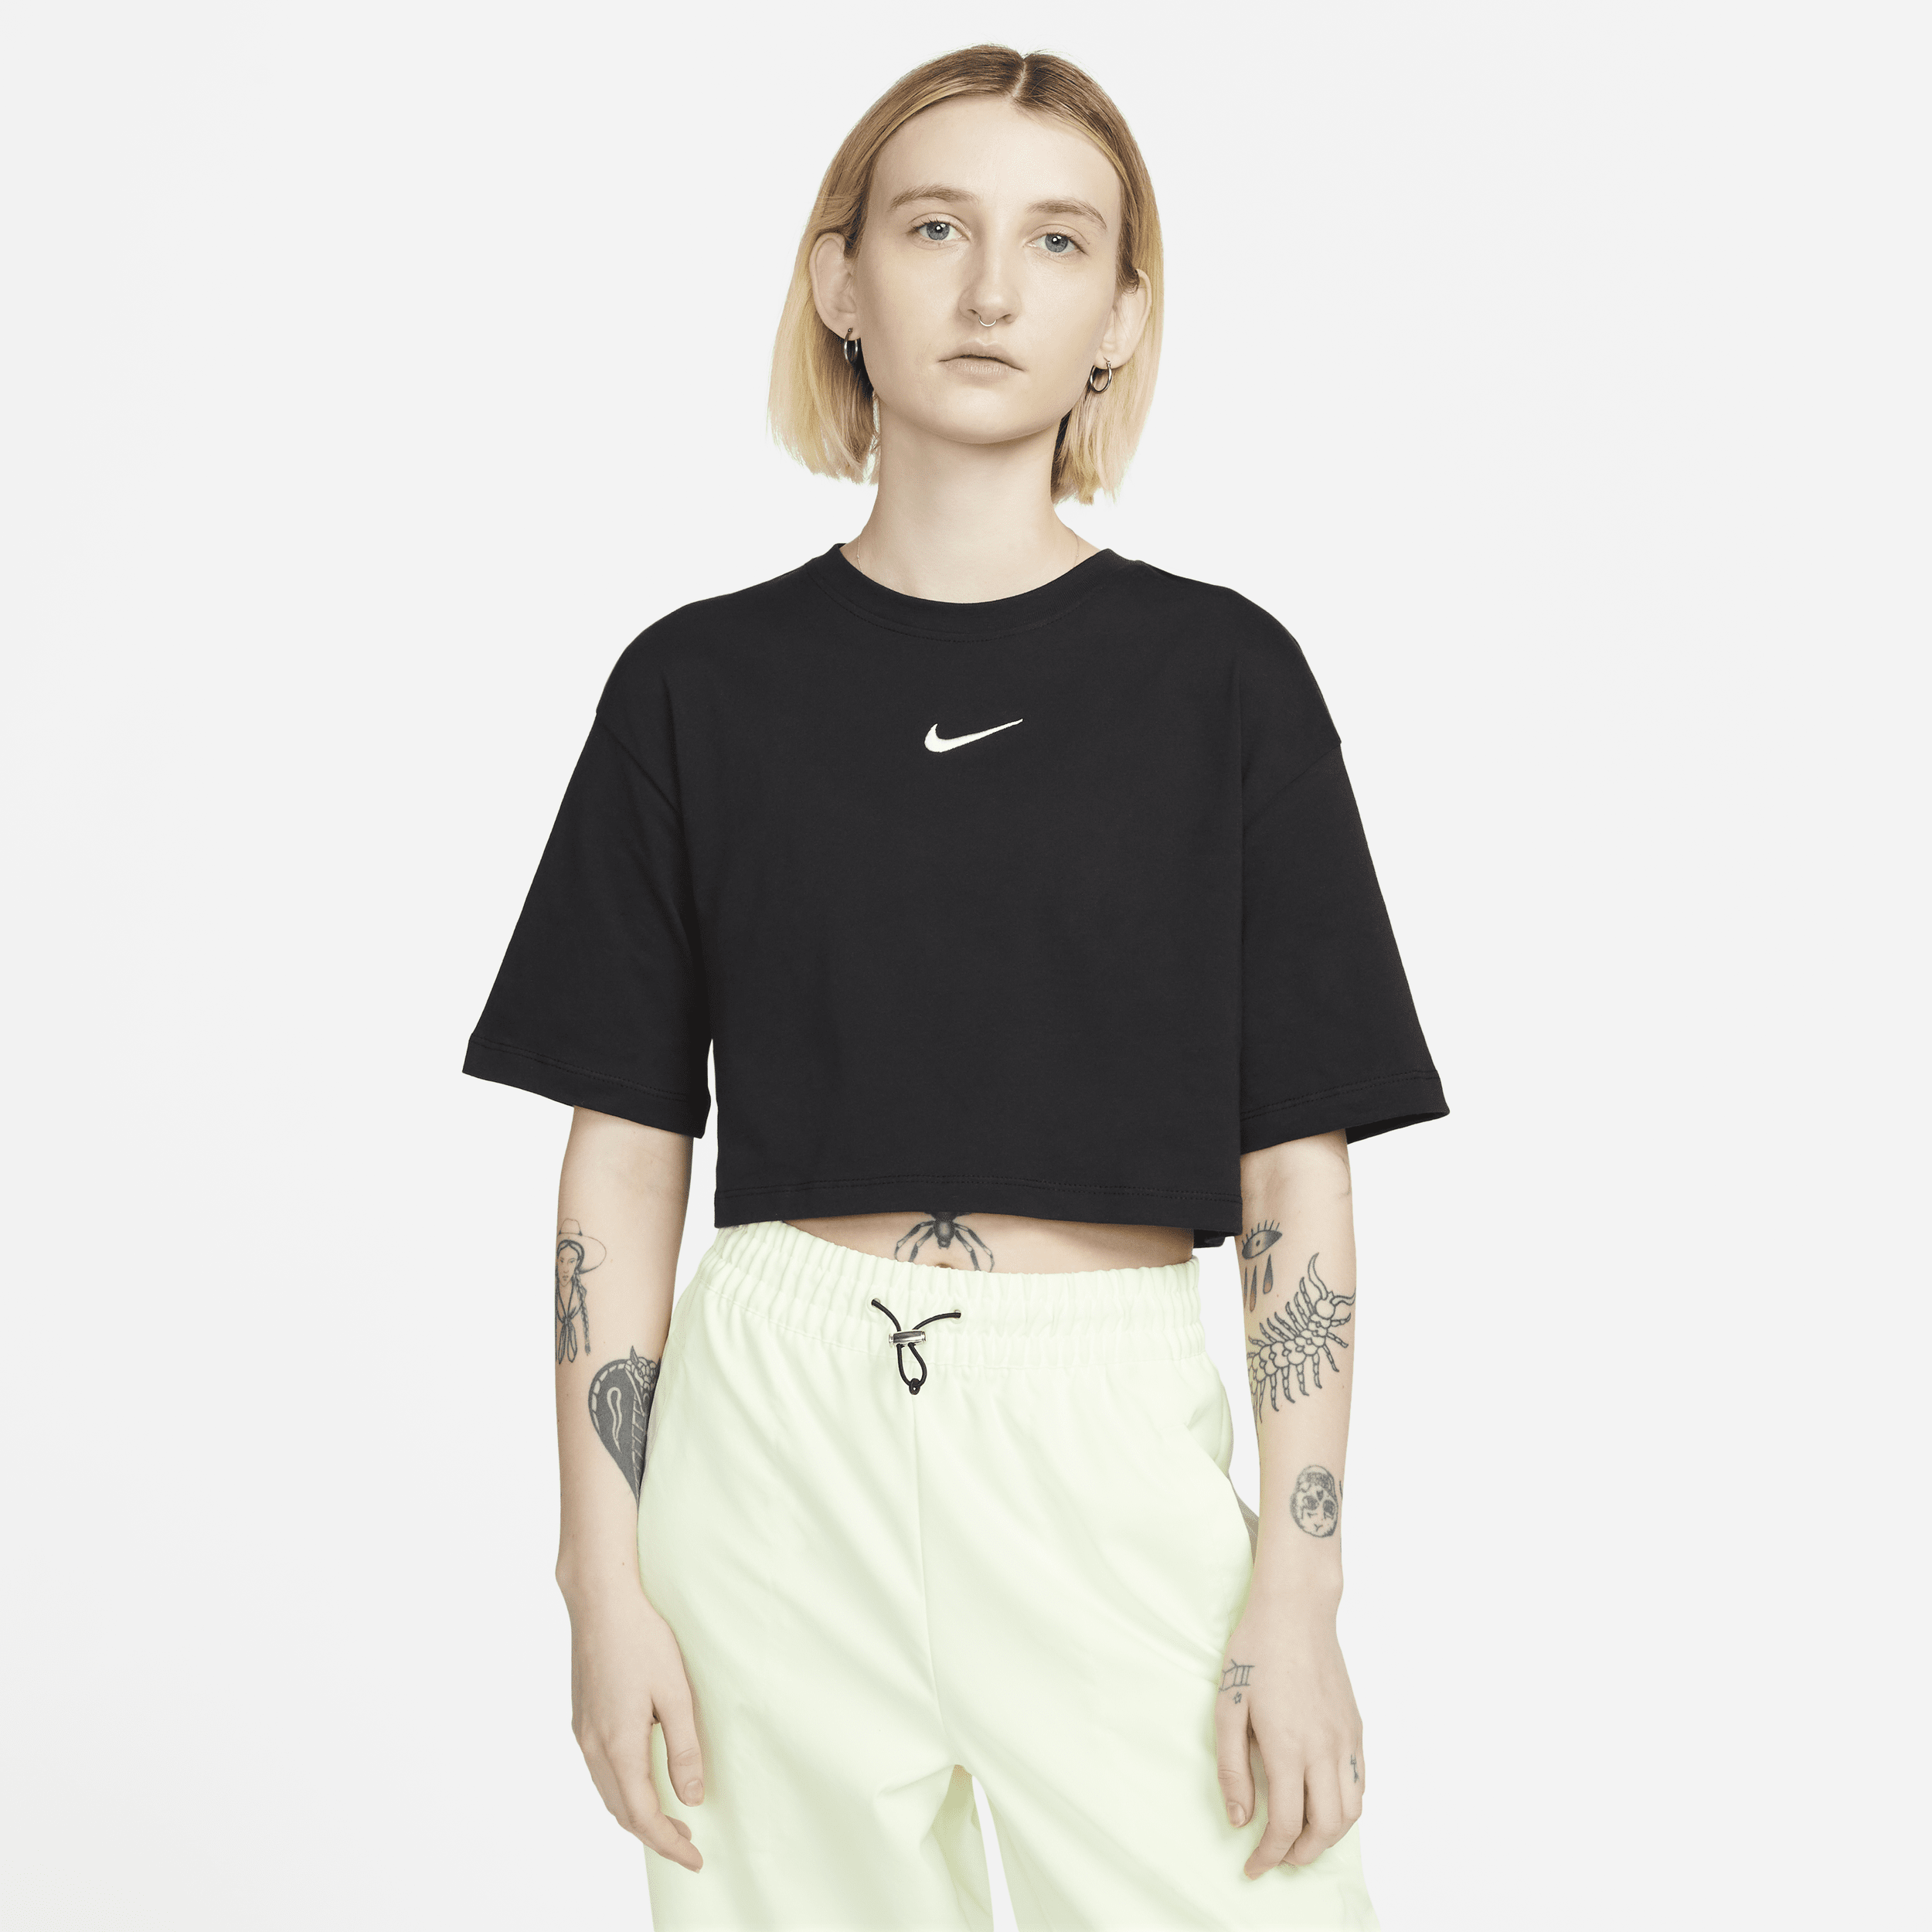 Kort Nike Sportswear-T-shirt til kvinder - sort